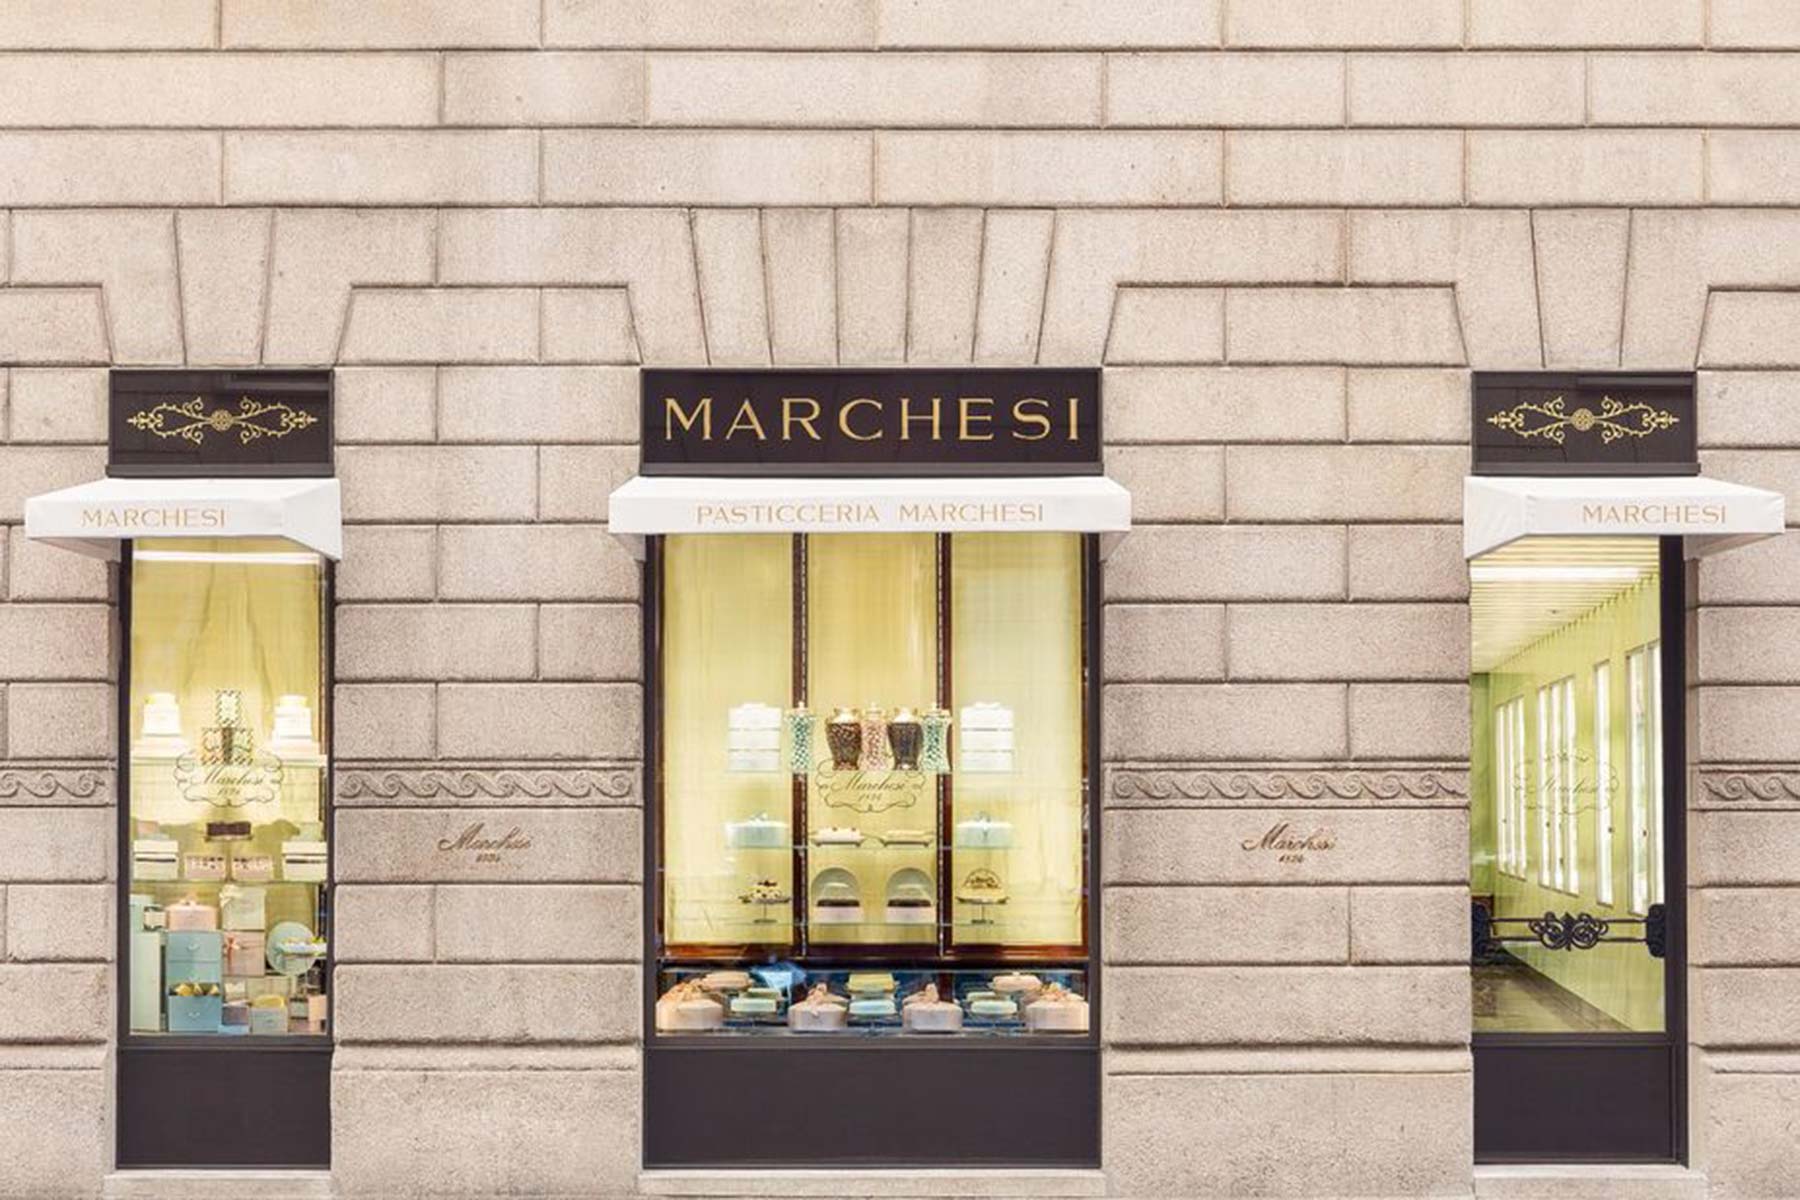 Pasticceria Marchesi: Prada's Bakery in Milan - An American in Rome